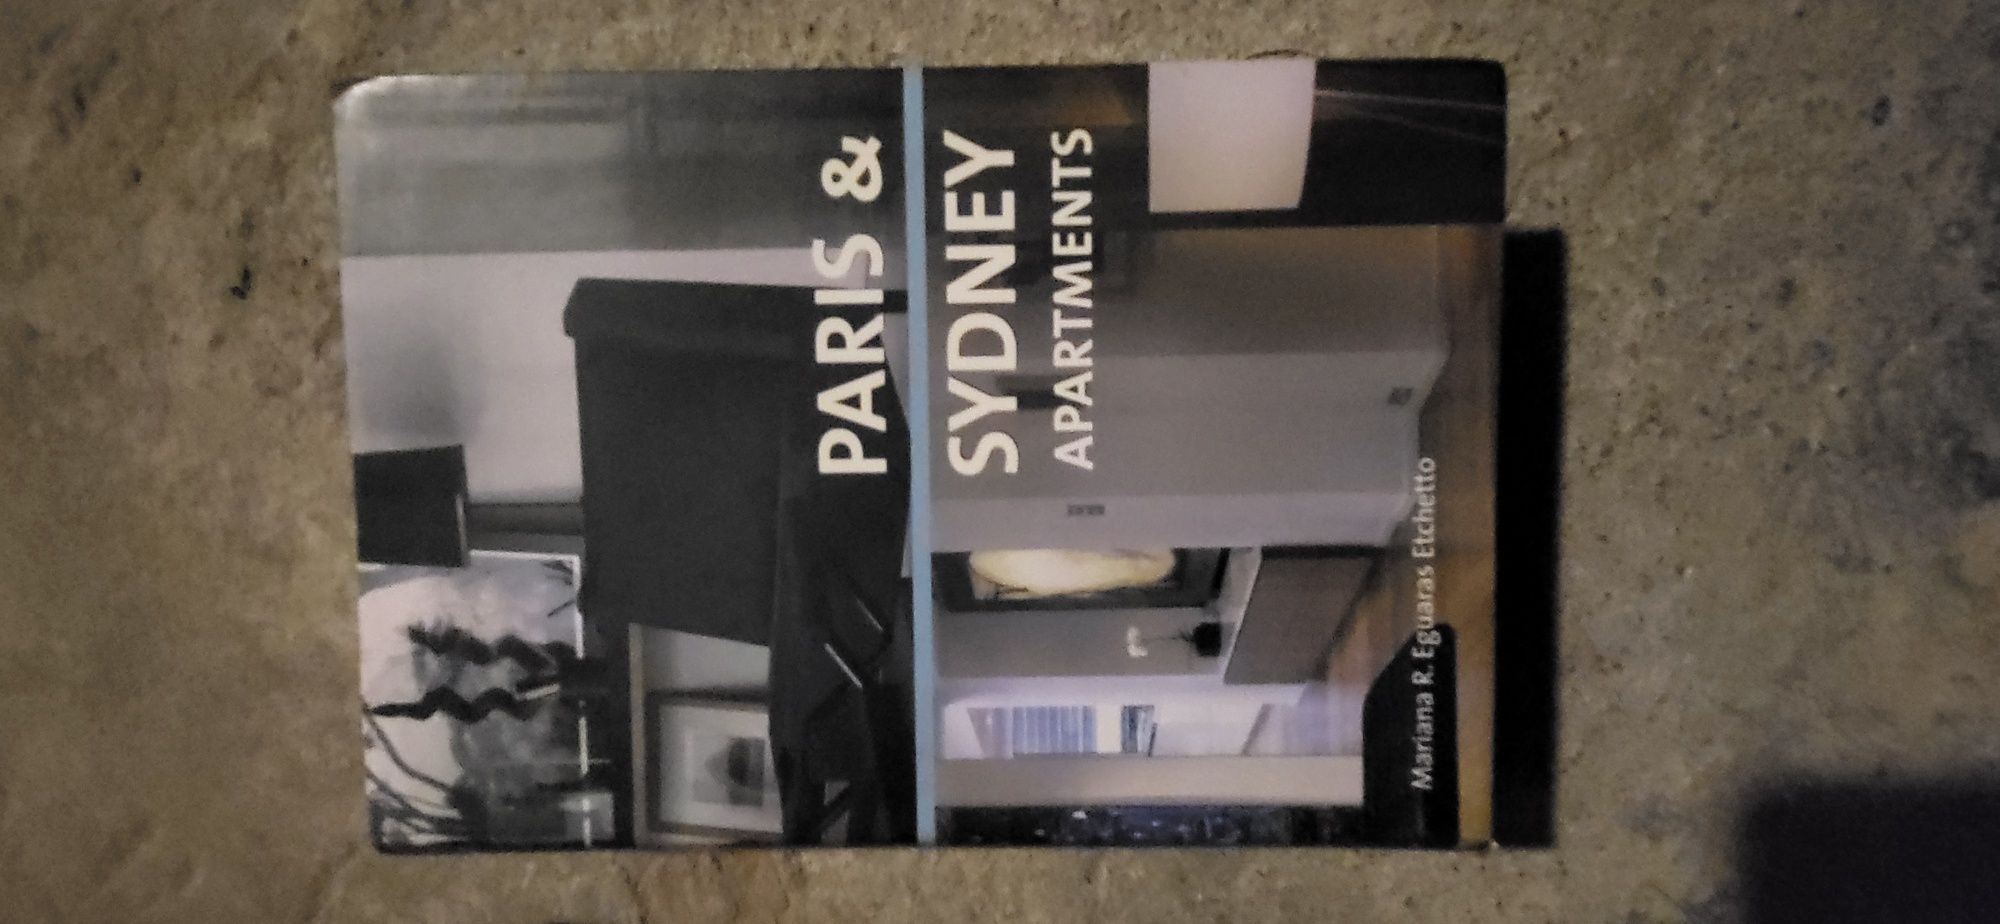 Paris & Sydney apartments